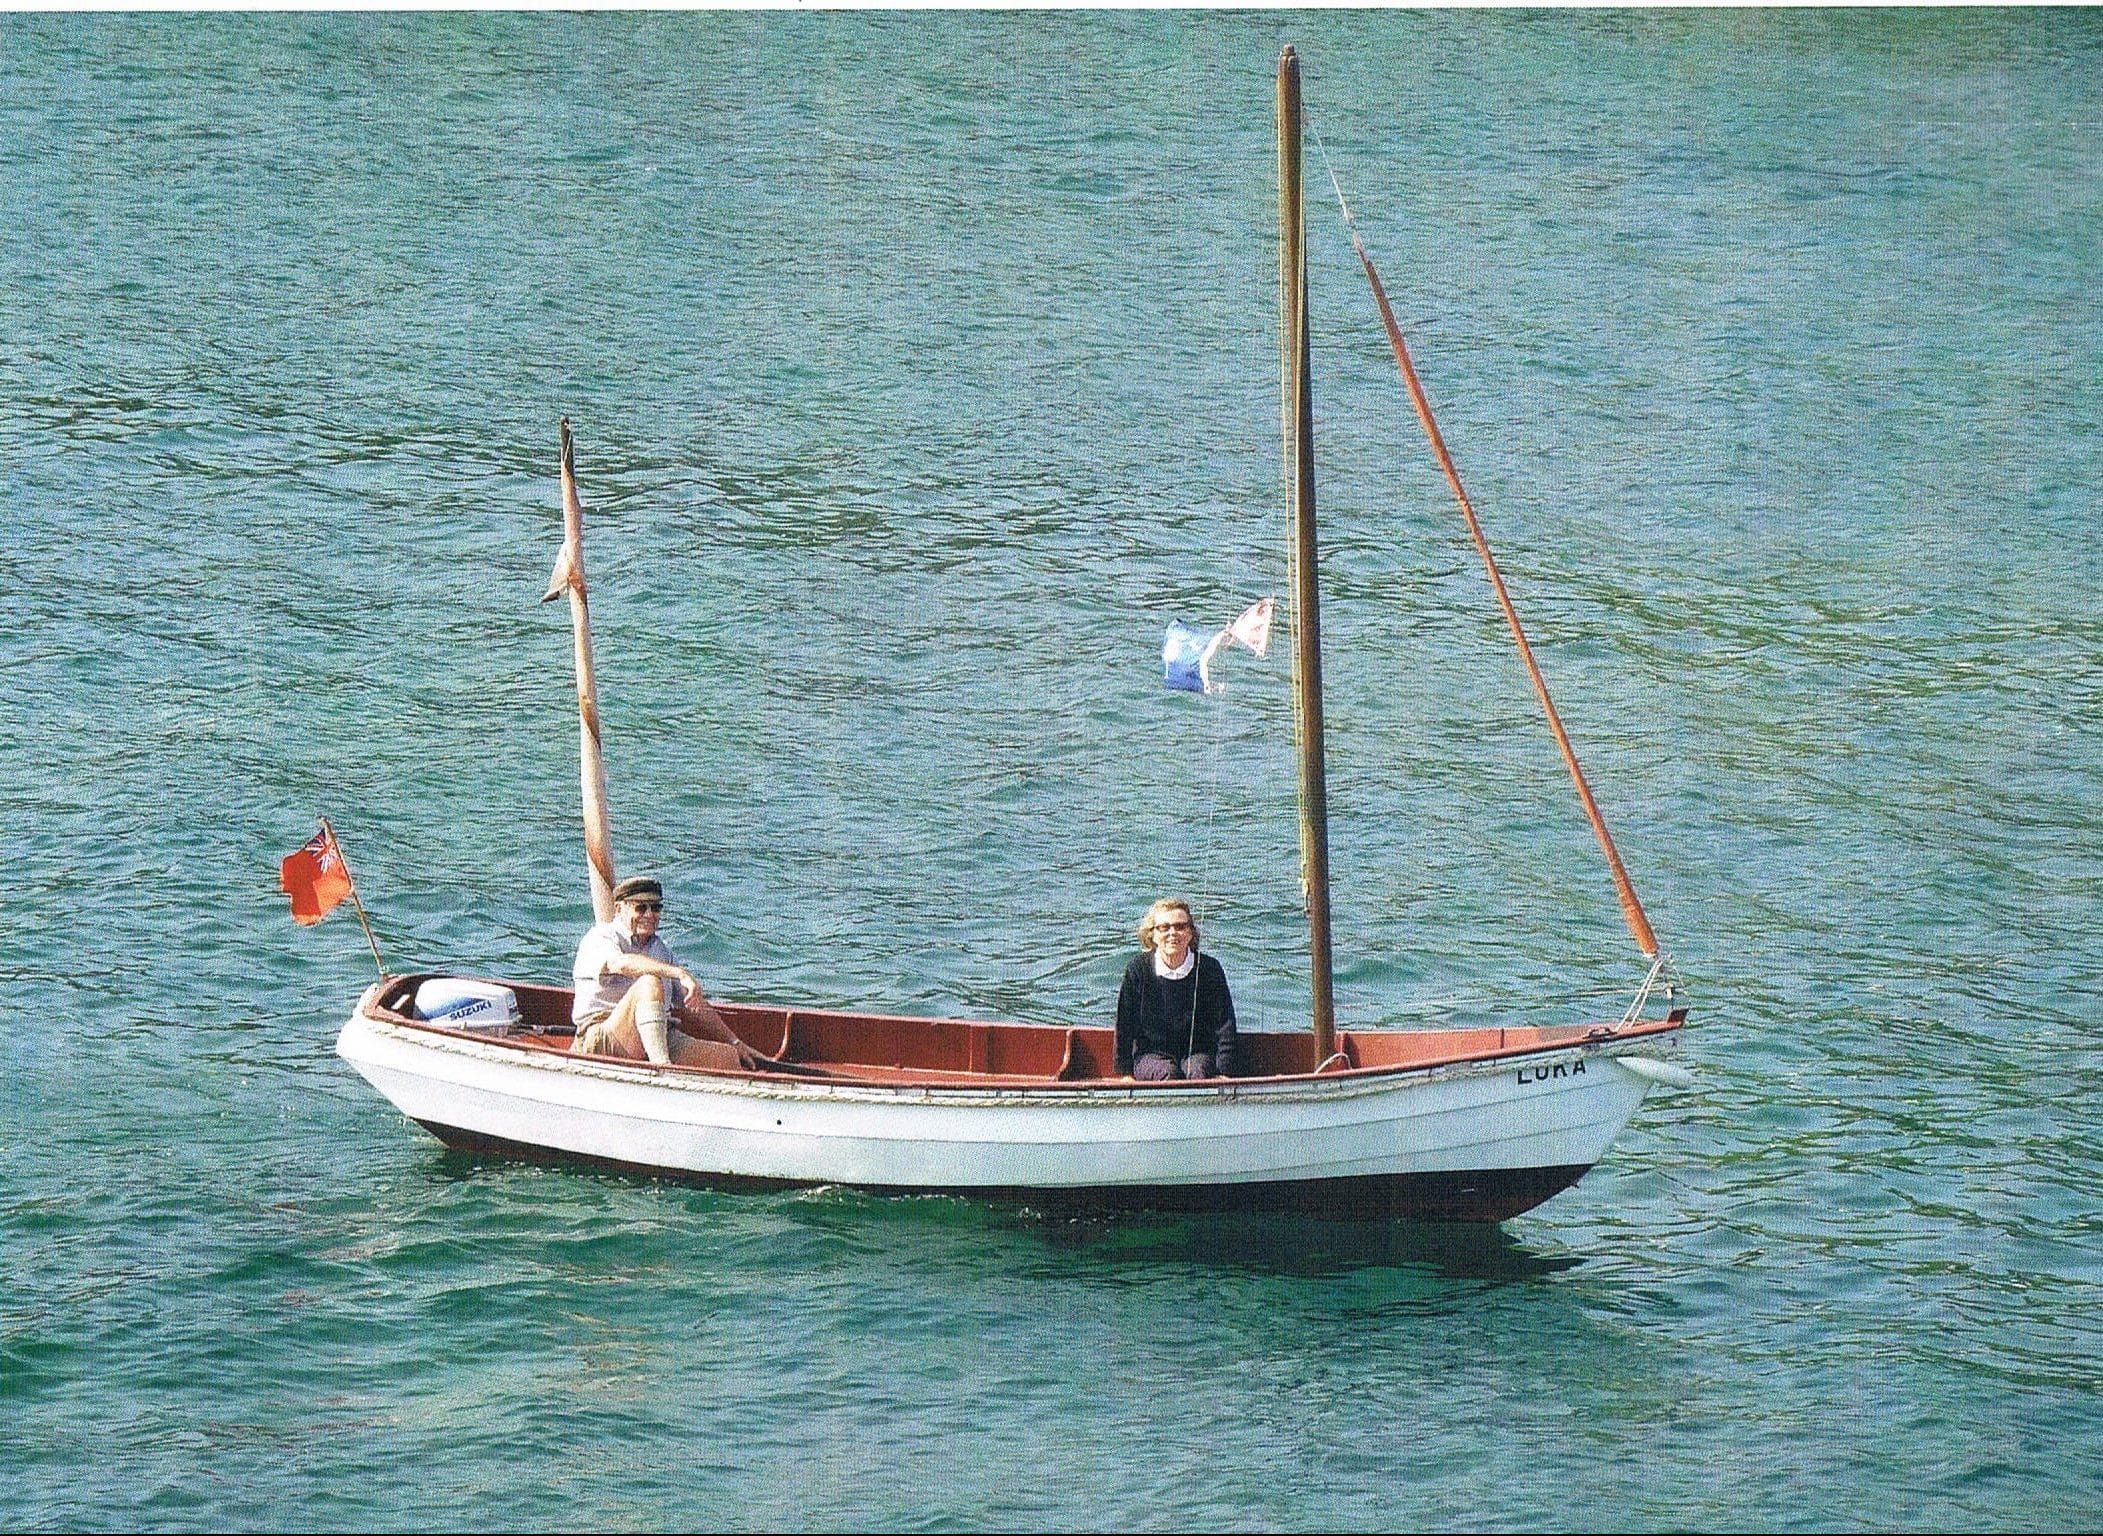 drascombe lugger sailboat